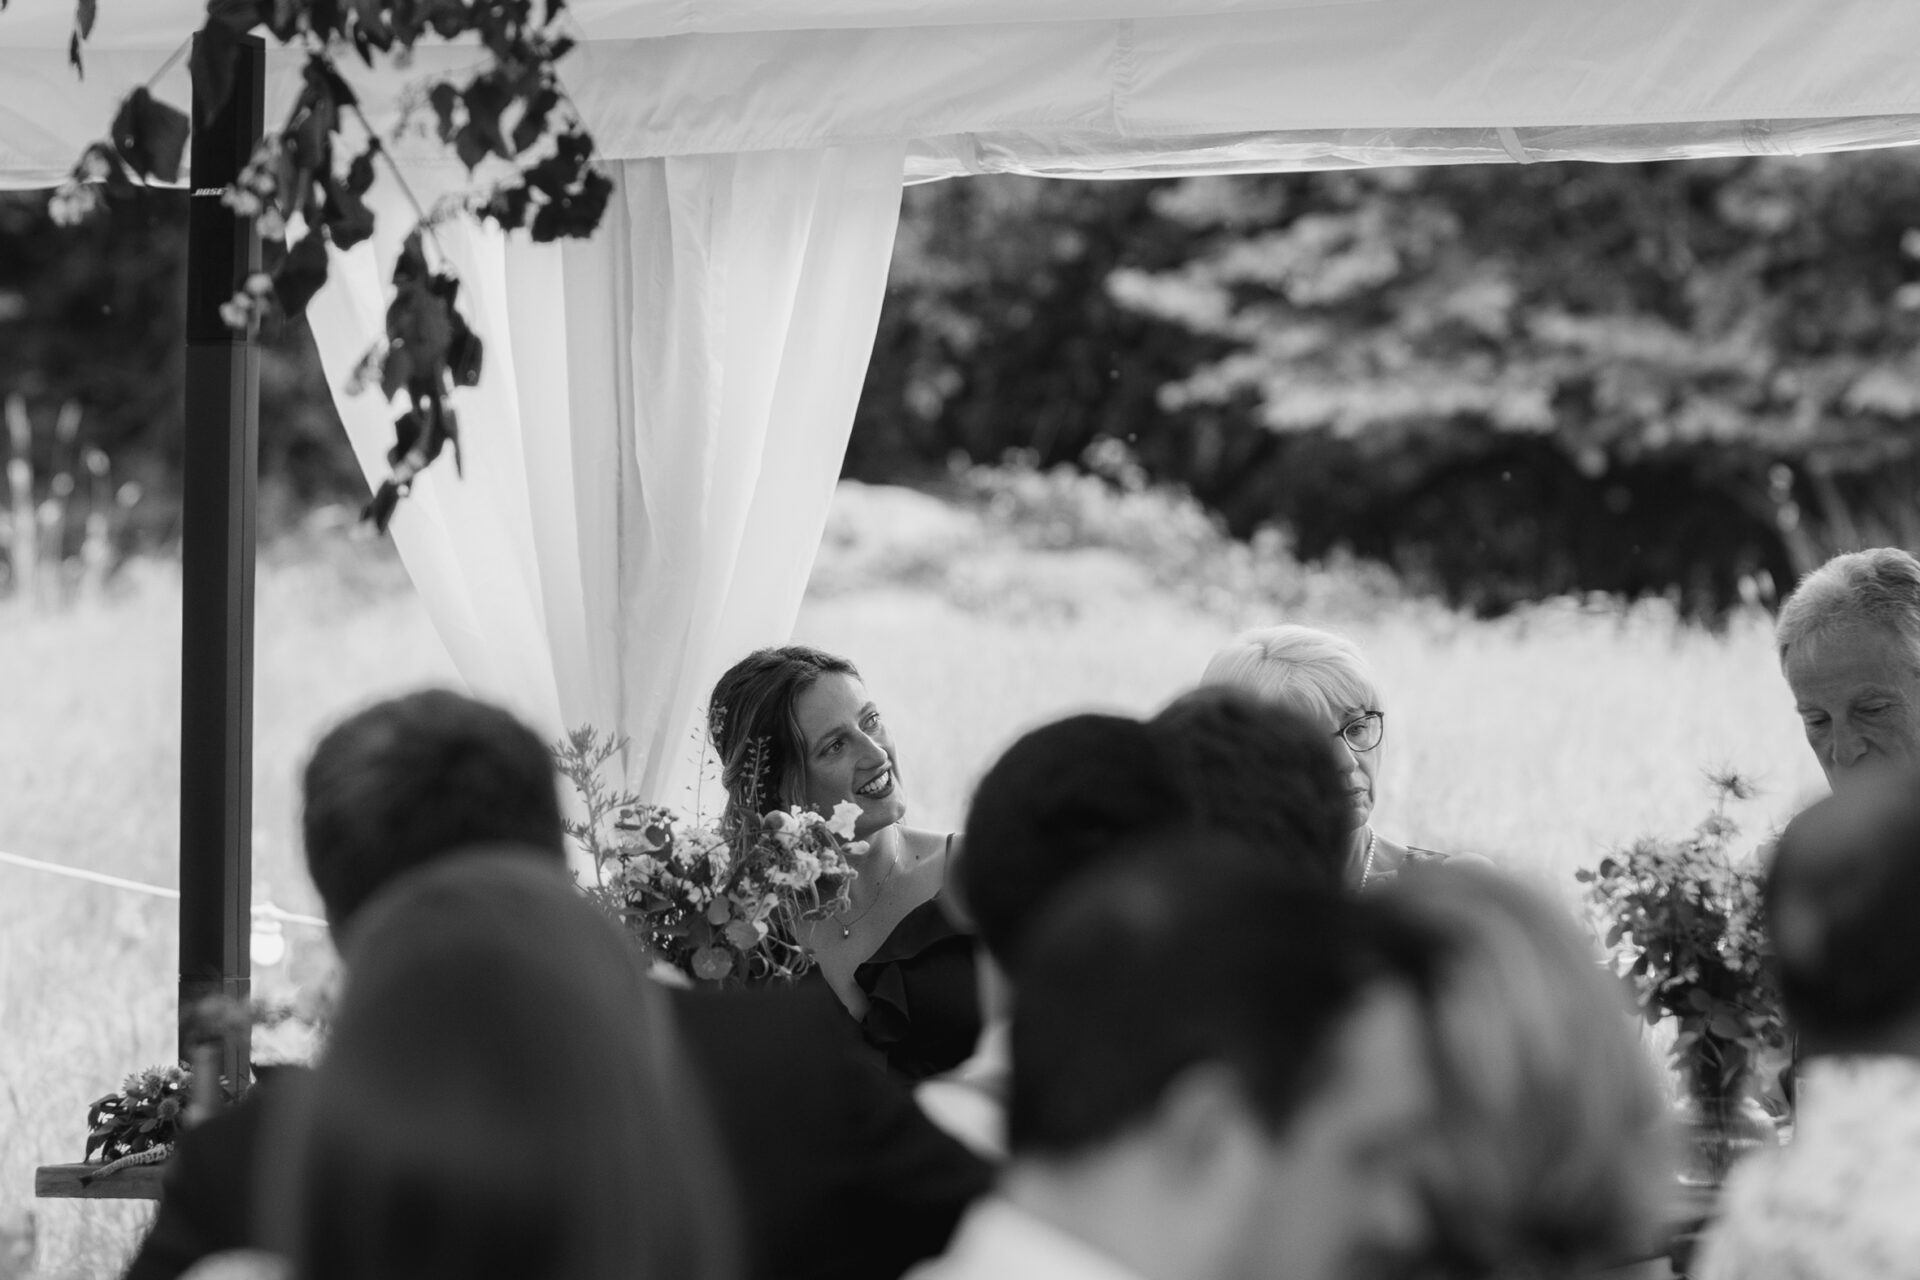 A wedding guest listens to the speeches at a Devon marquee wedding